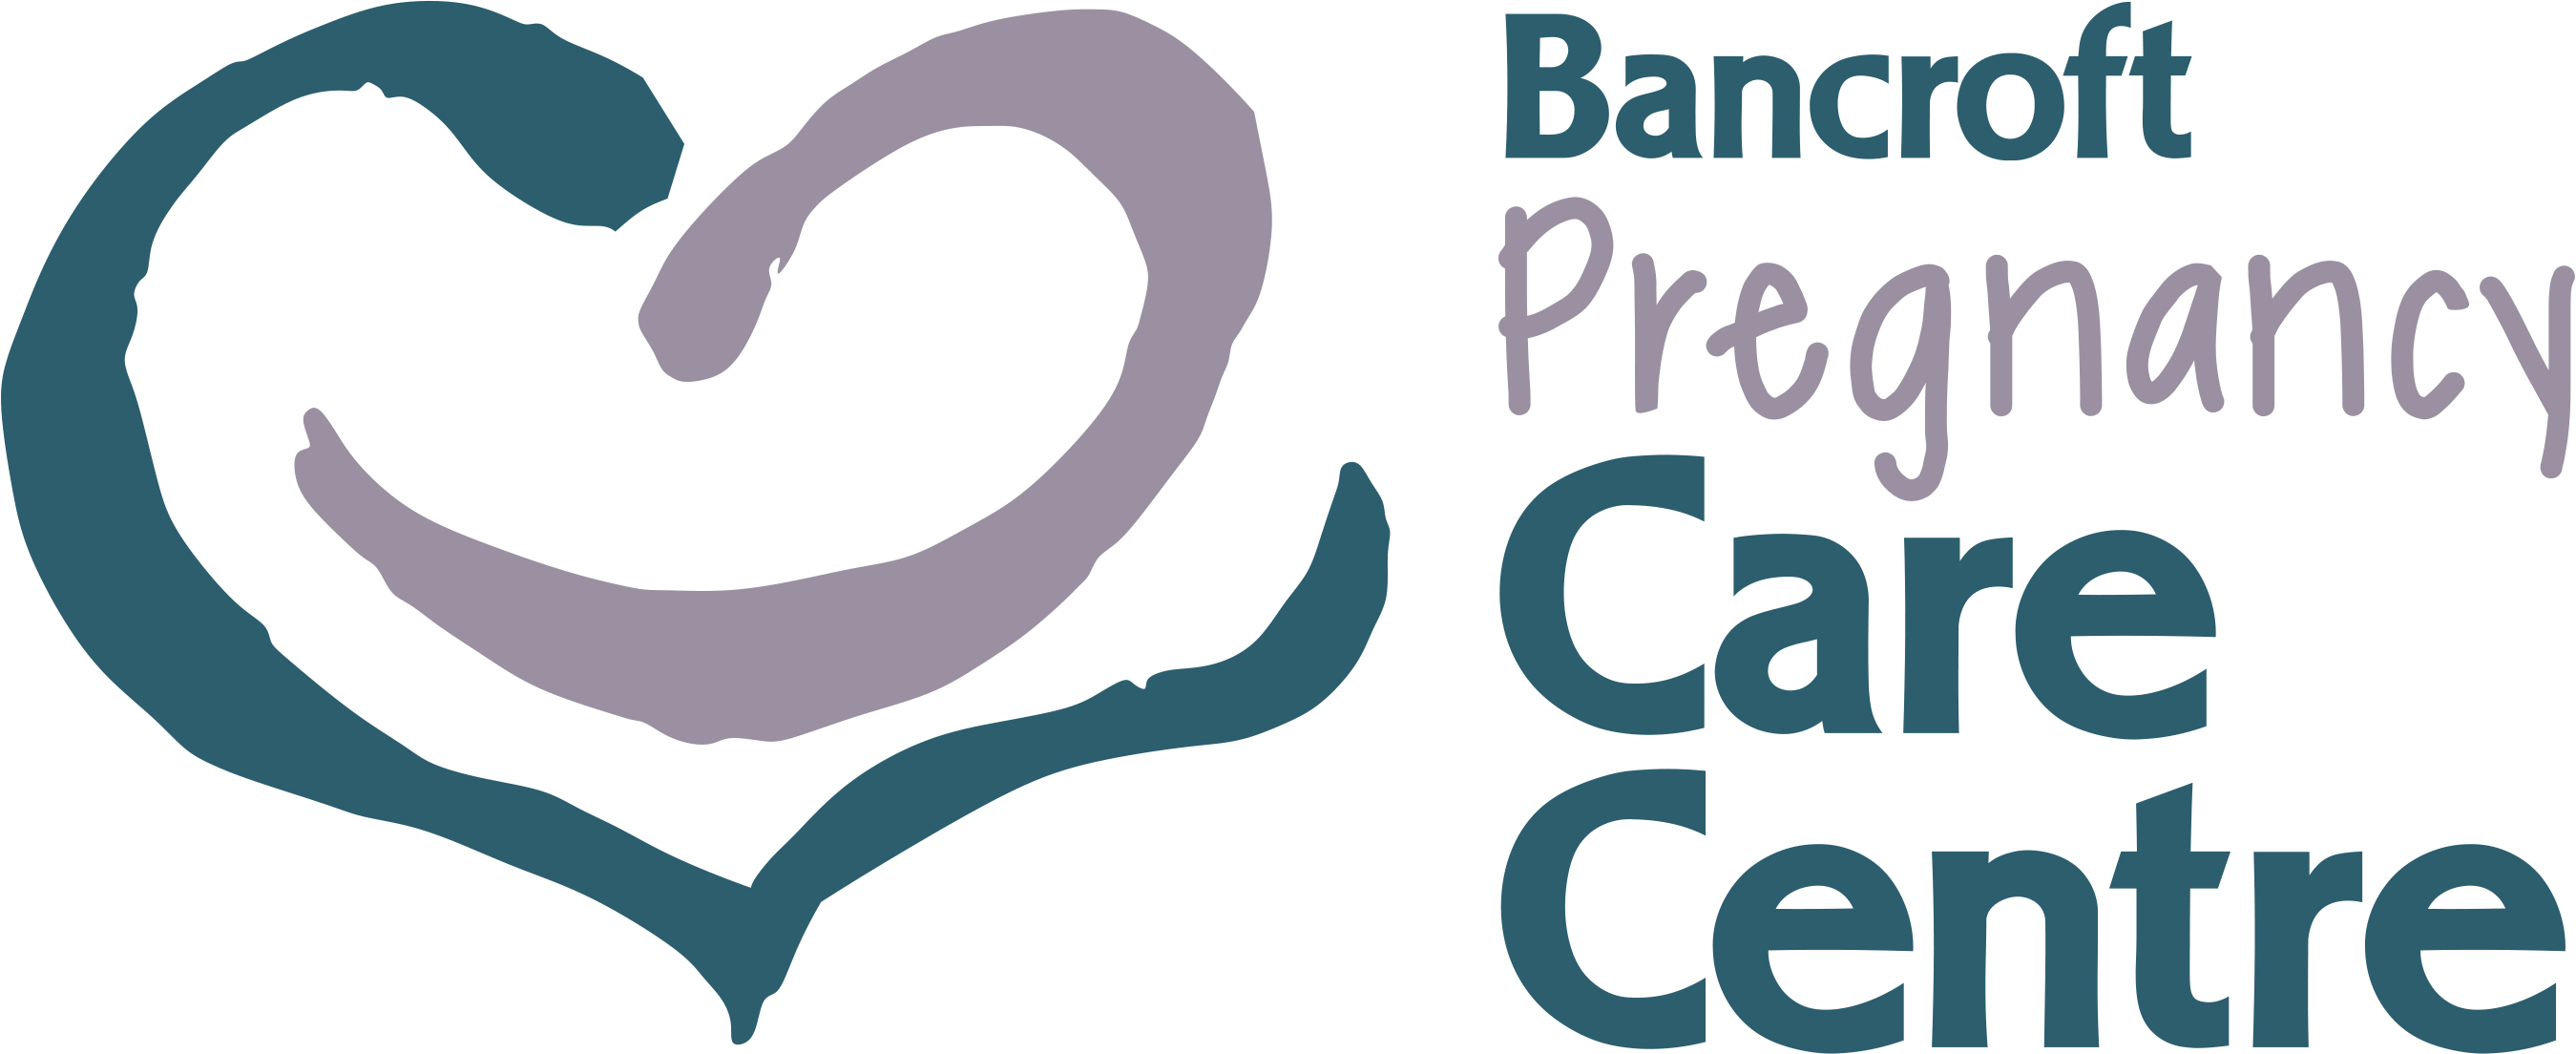 BANCROFT PREGNANCY CARE CENTRE logo